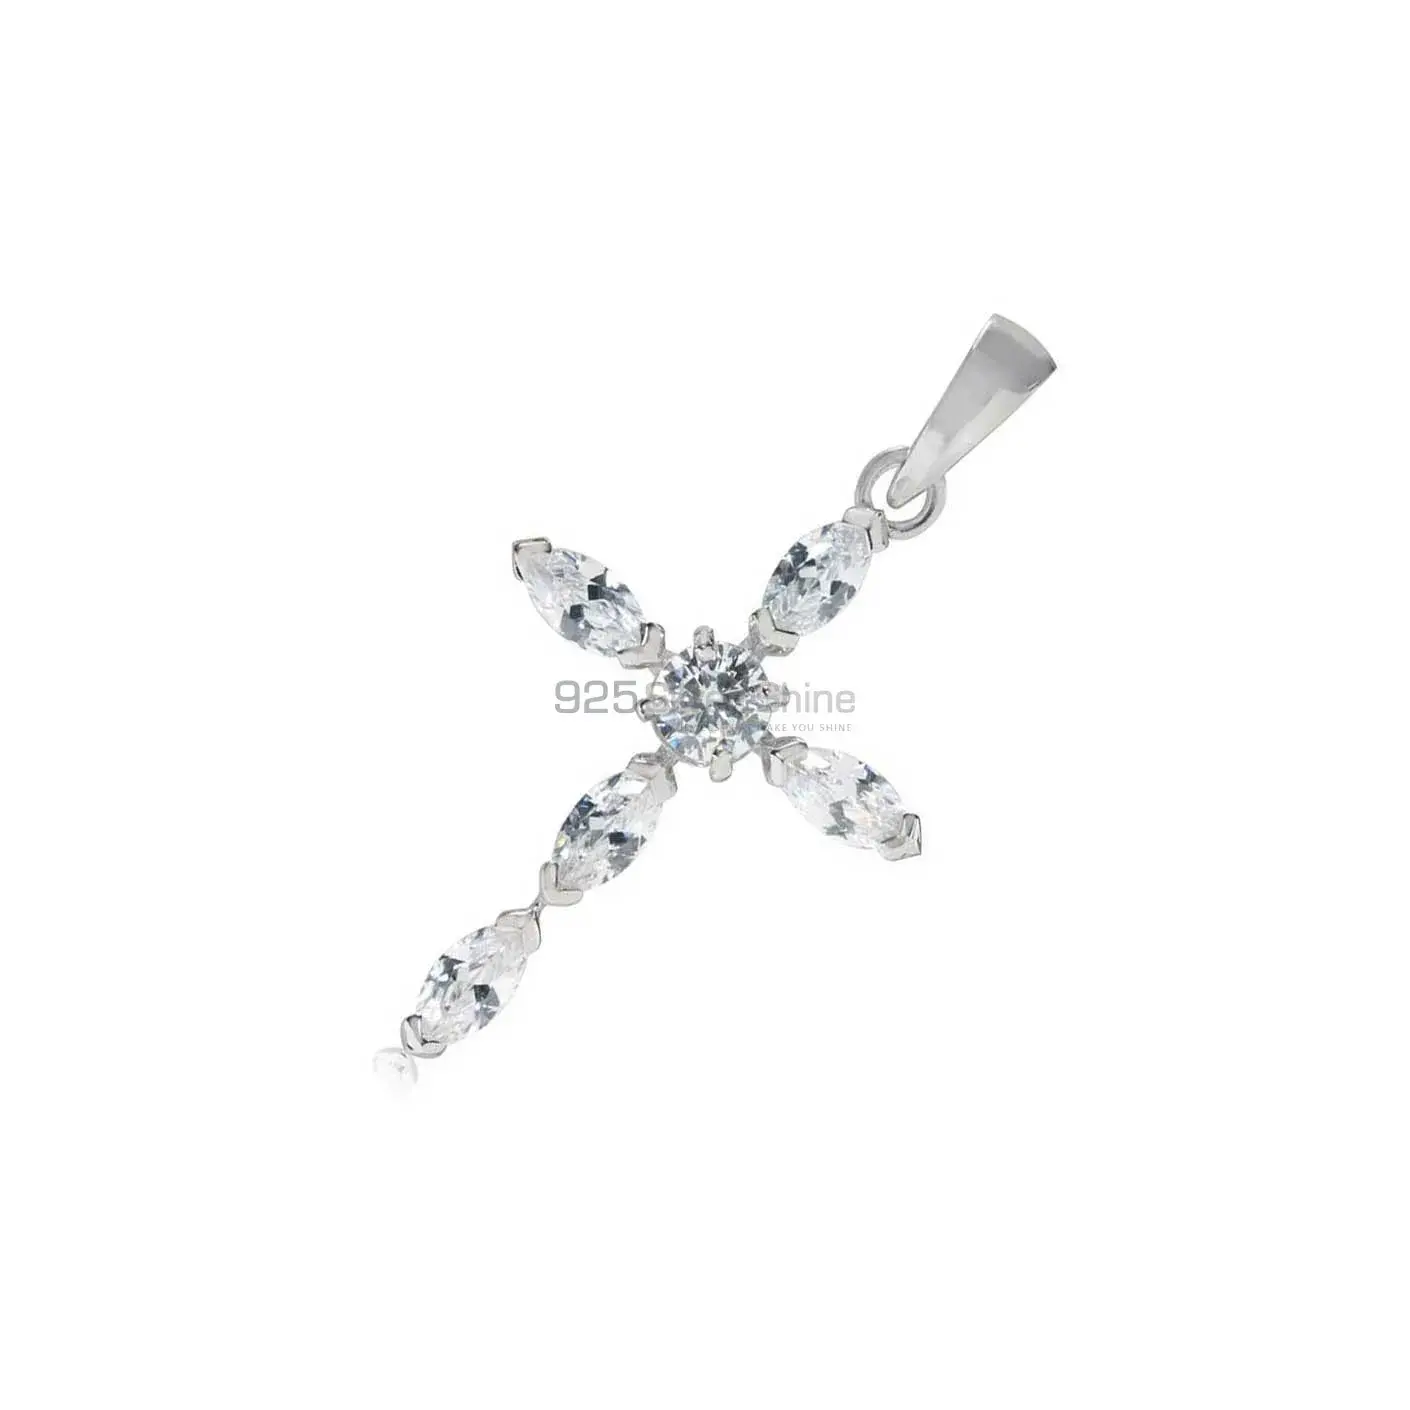 Best Quality 925 Fine Silver Pendants Suppliers In White Topaz Gemstone Jewelry 925SP04_0